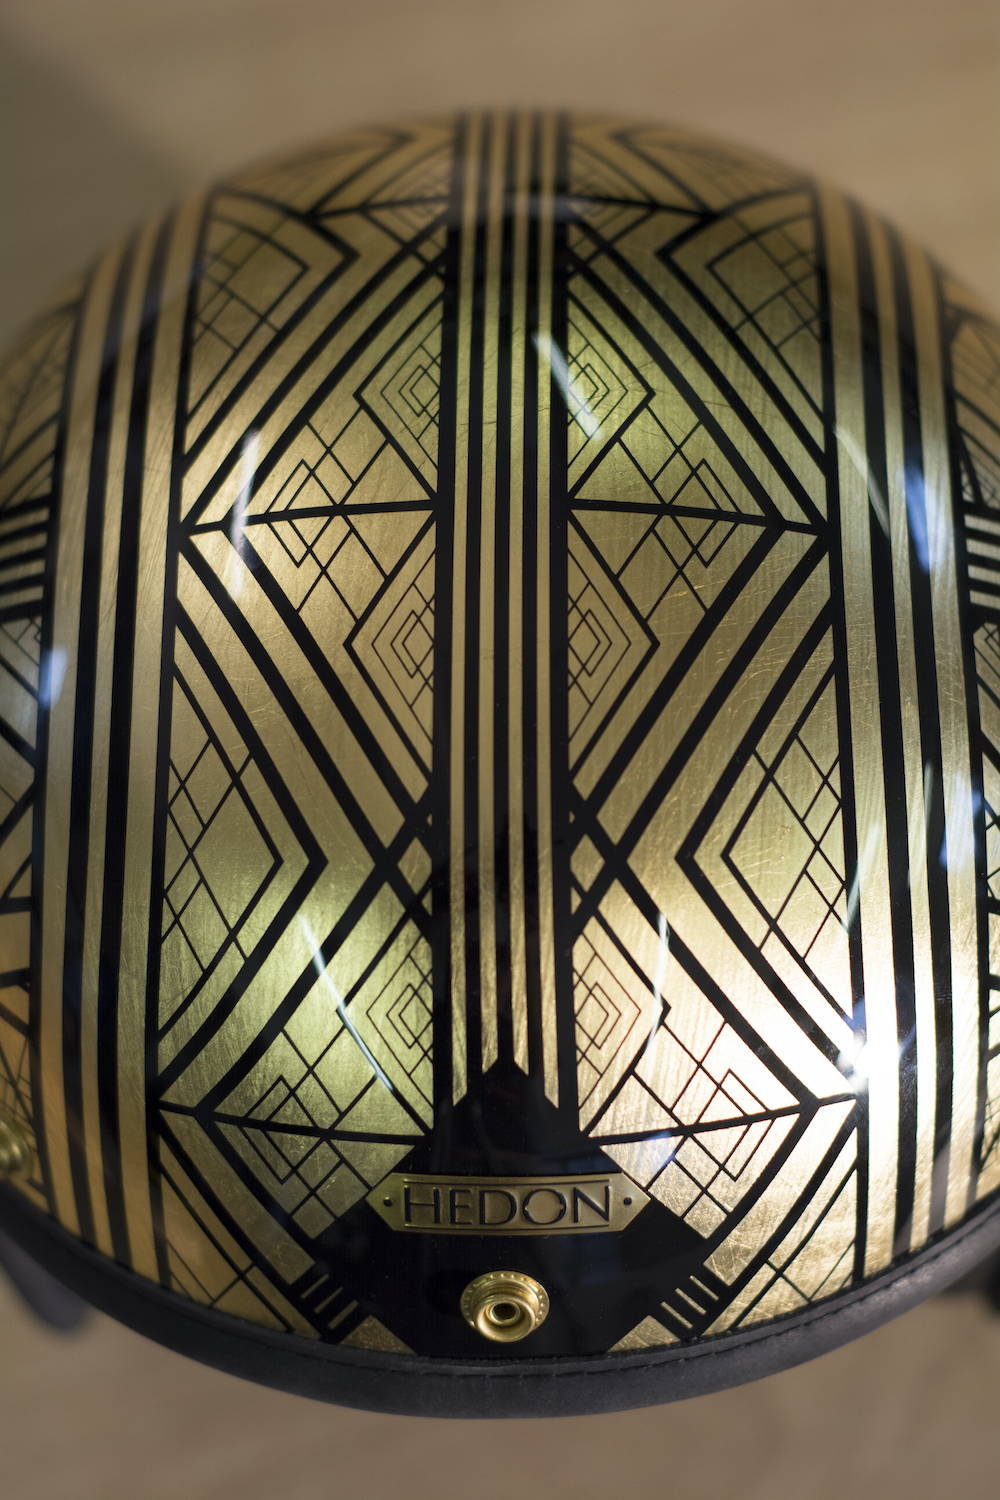 Hedon x DGR 2016 Kingpin Helmet